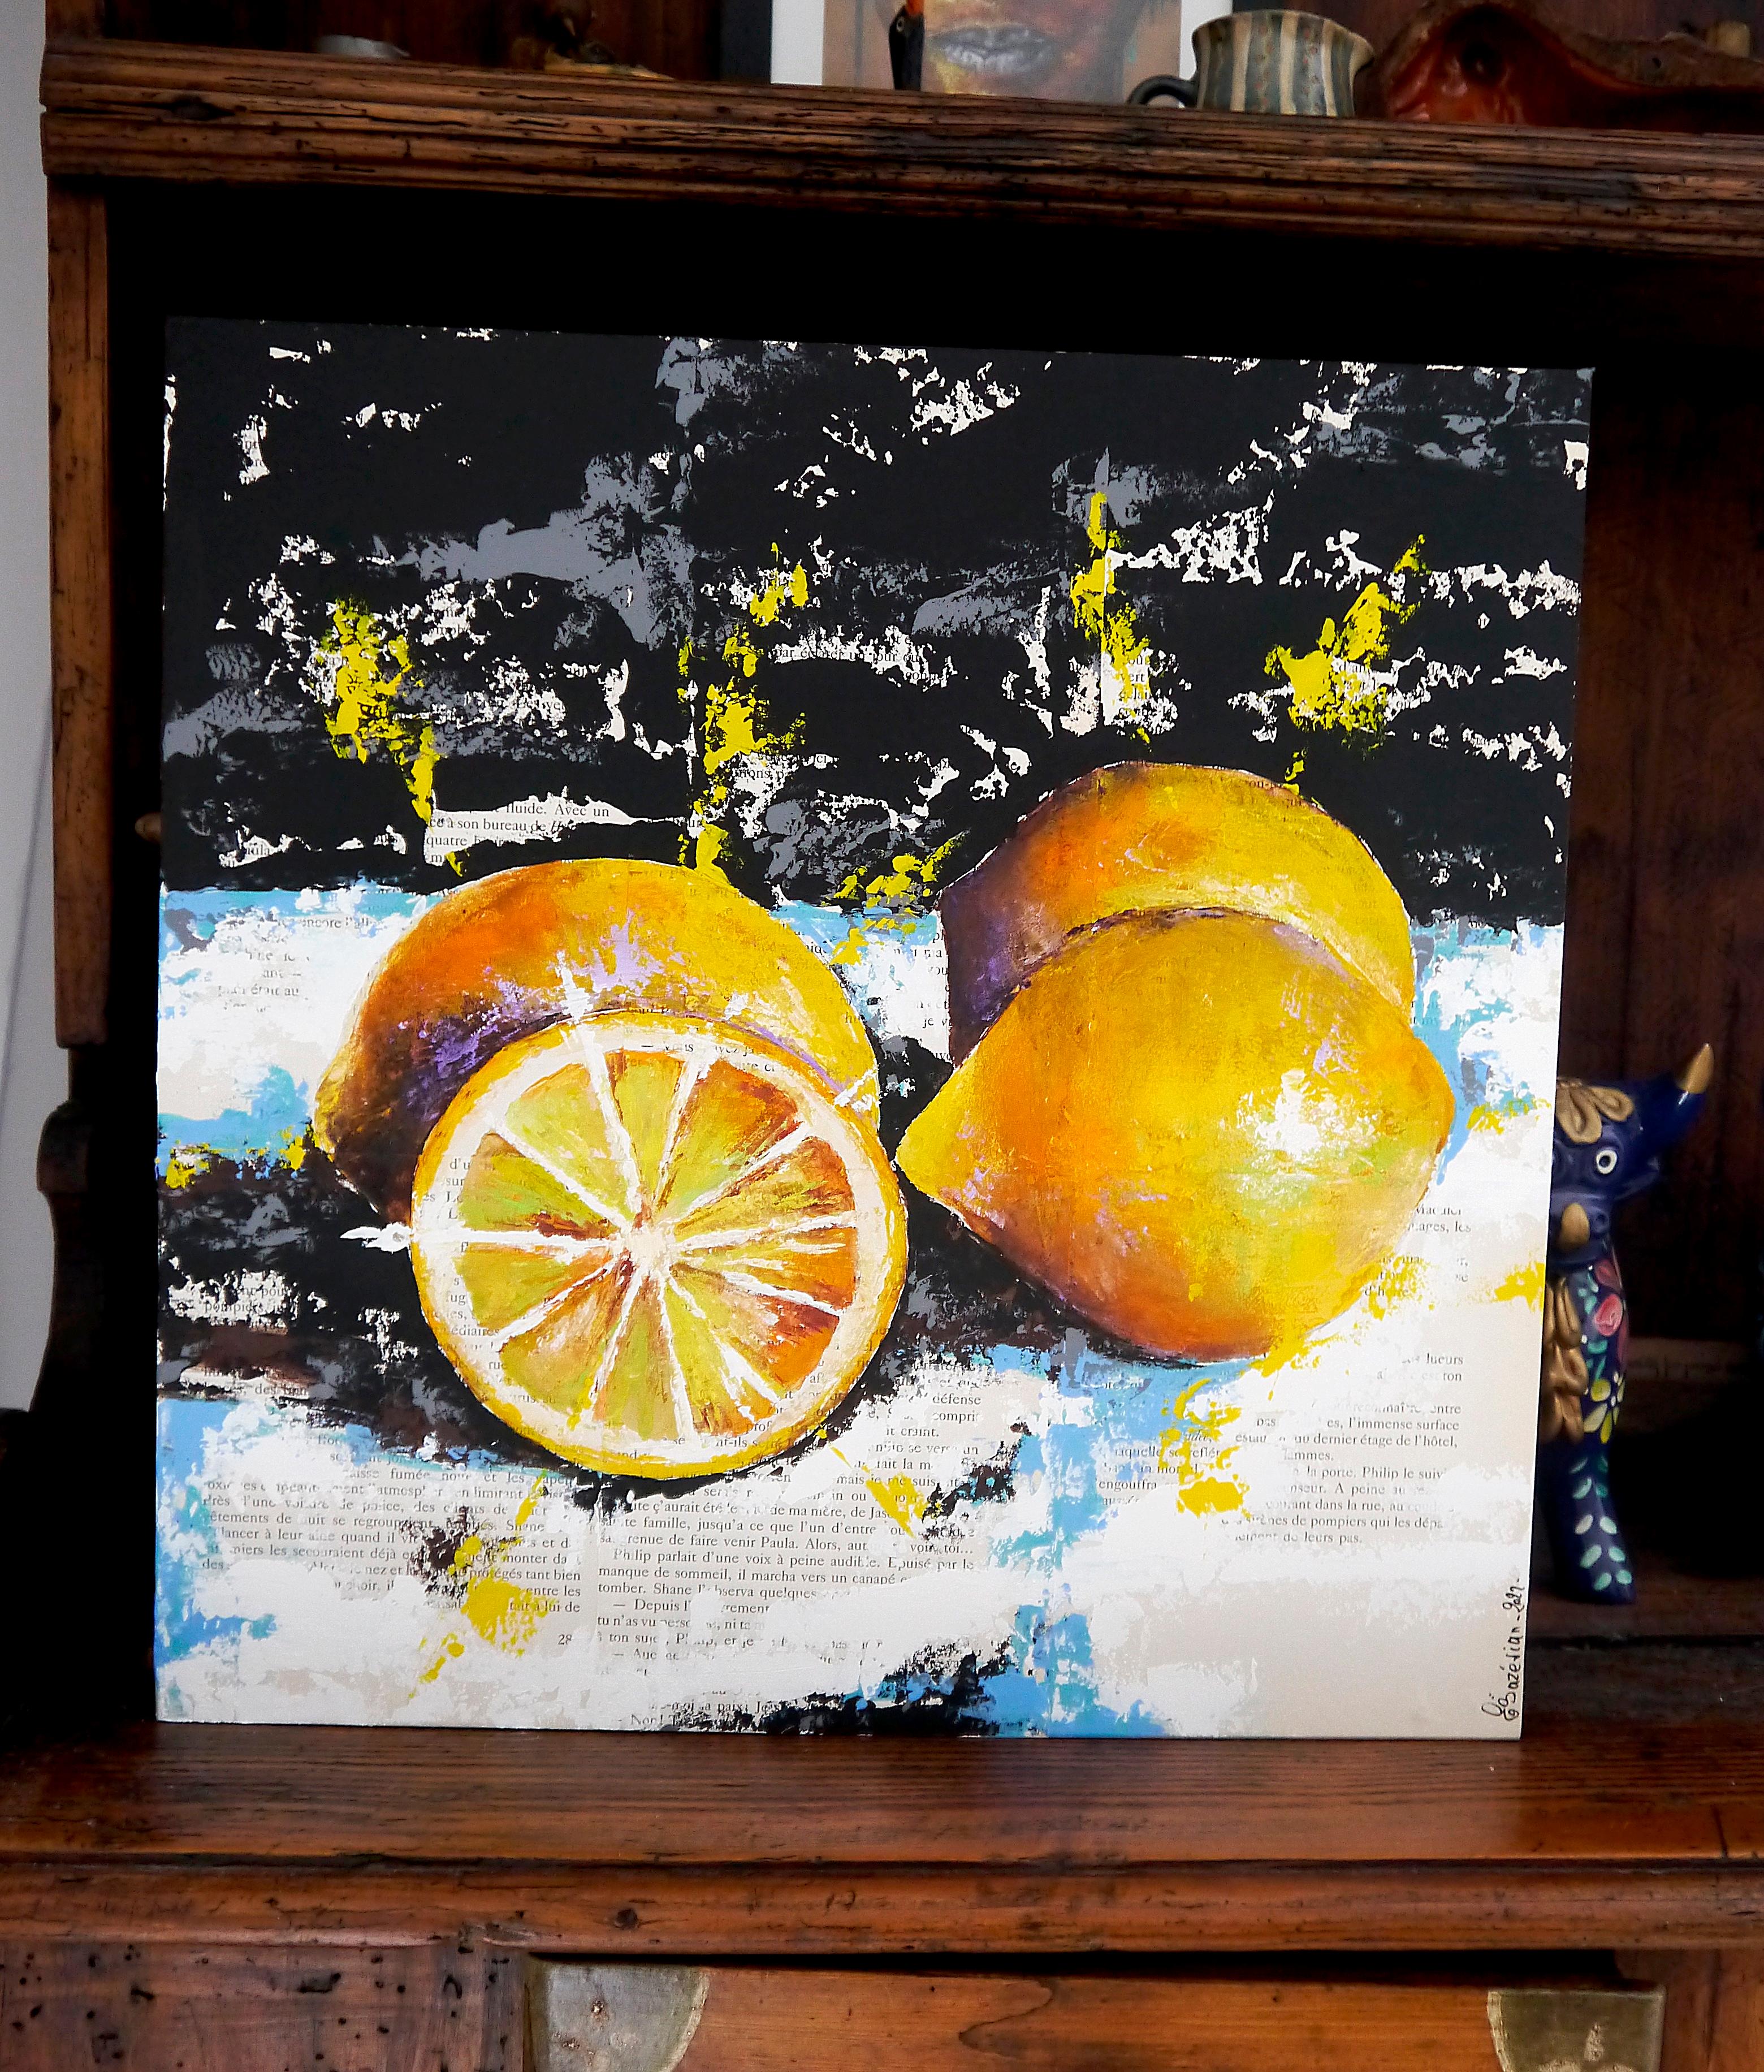 French School - Still life Lemon Summer Starwars - Post Impressionist - Painting by Bazevian DelaCapuciniere